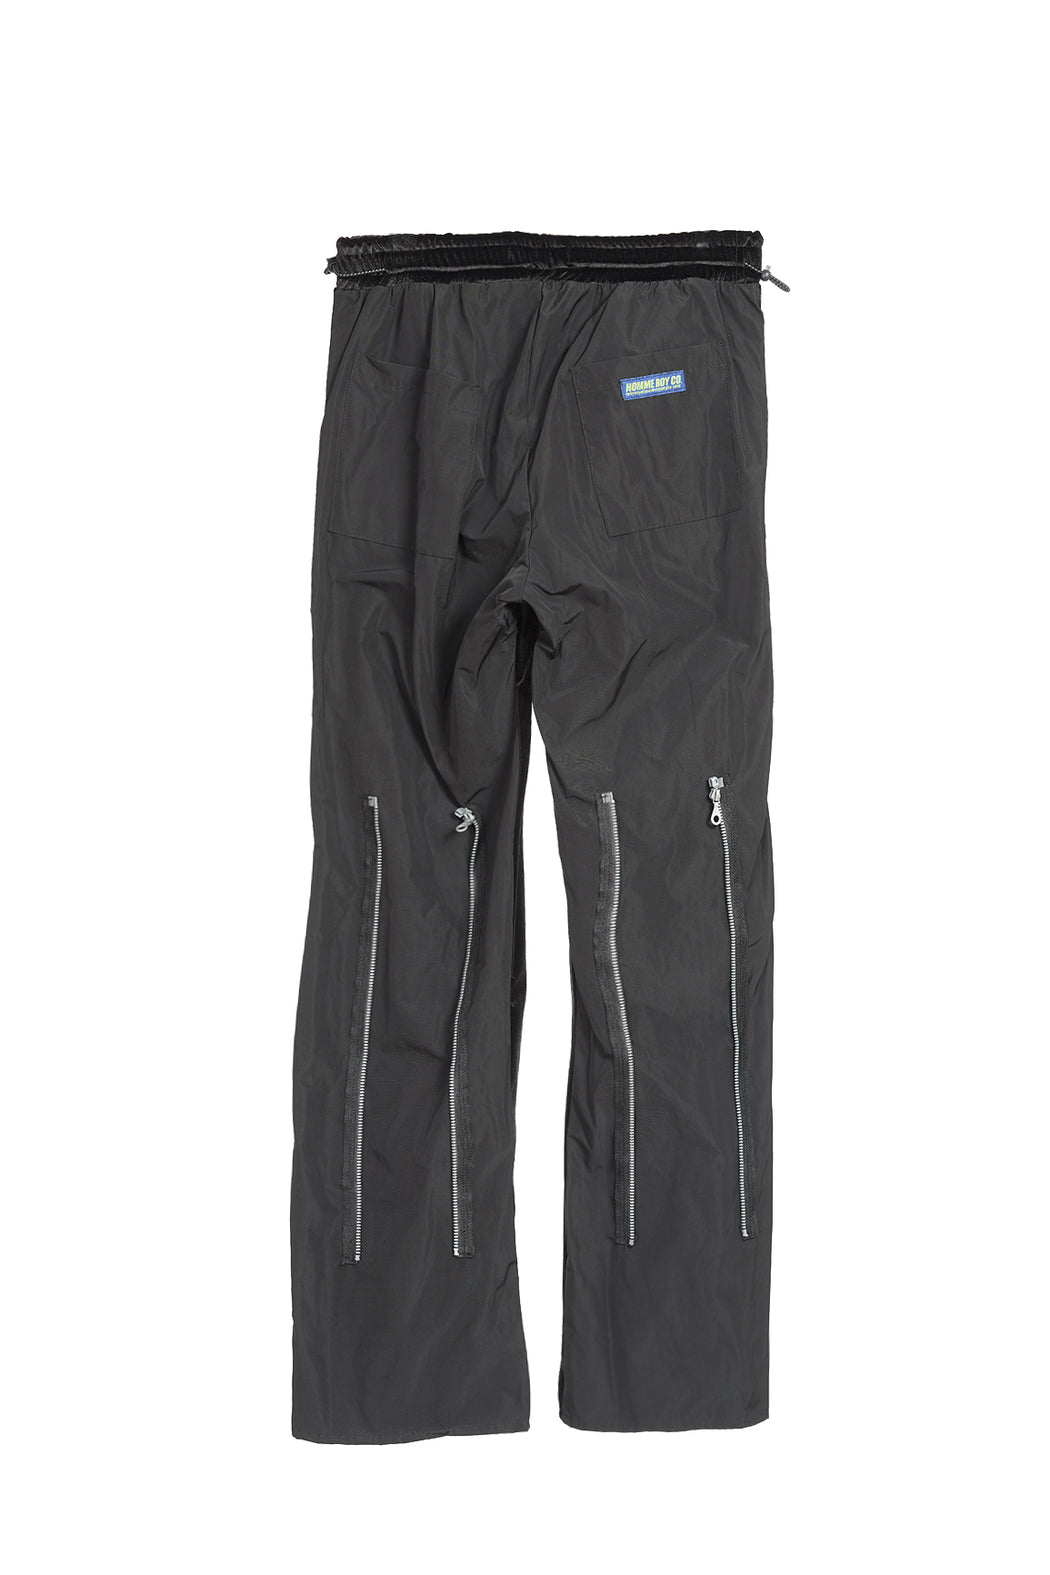 Hybrid Pants w/ Zips